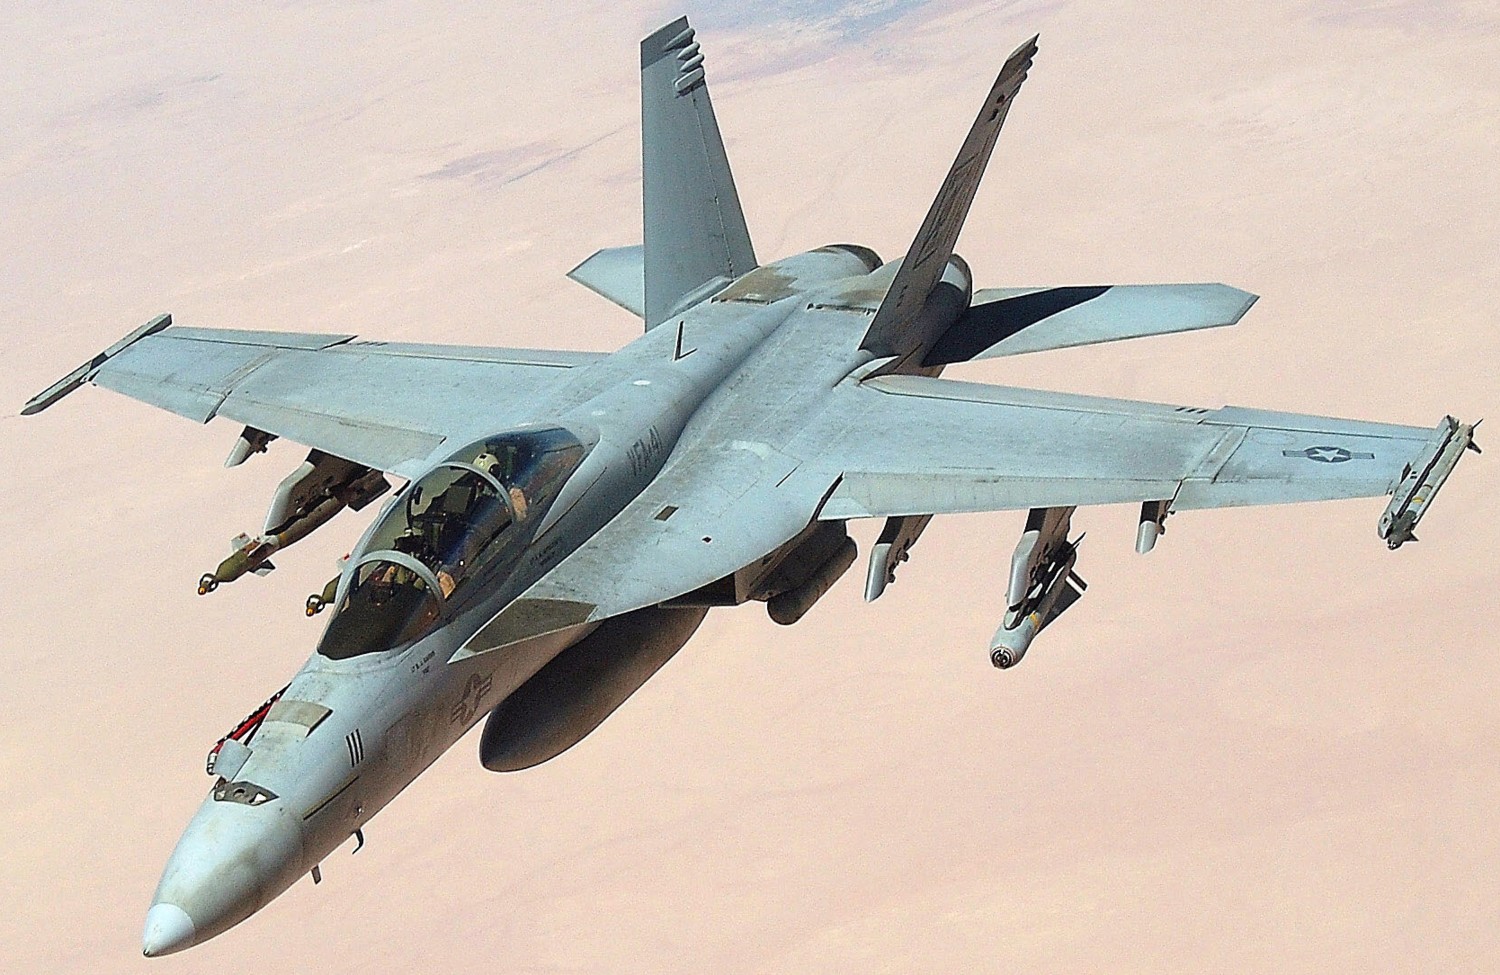 vfa-41 black aces strike fighter squadron f/a-18f super hornet cvw-9 nas lemoore california us navy 04x